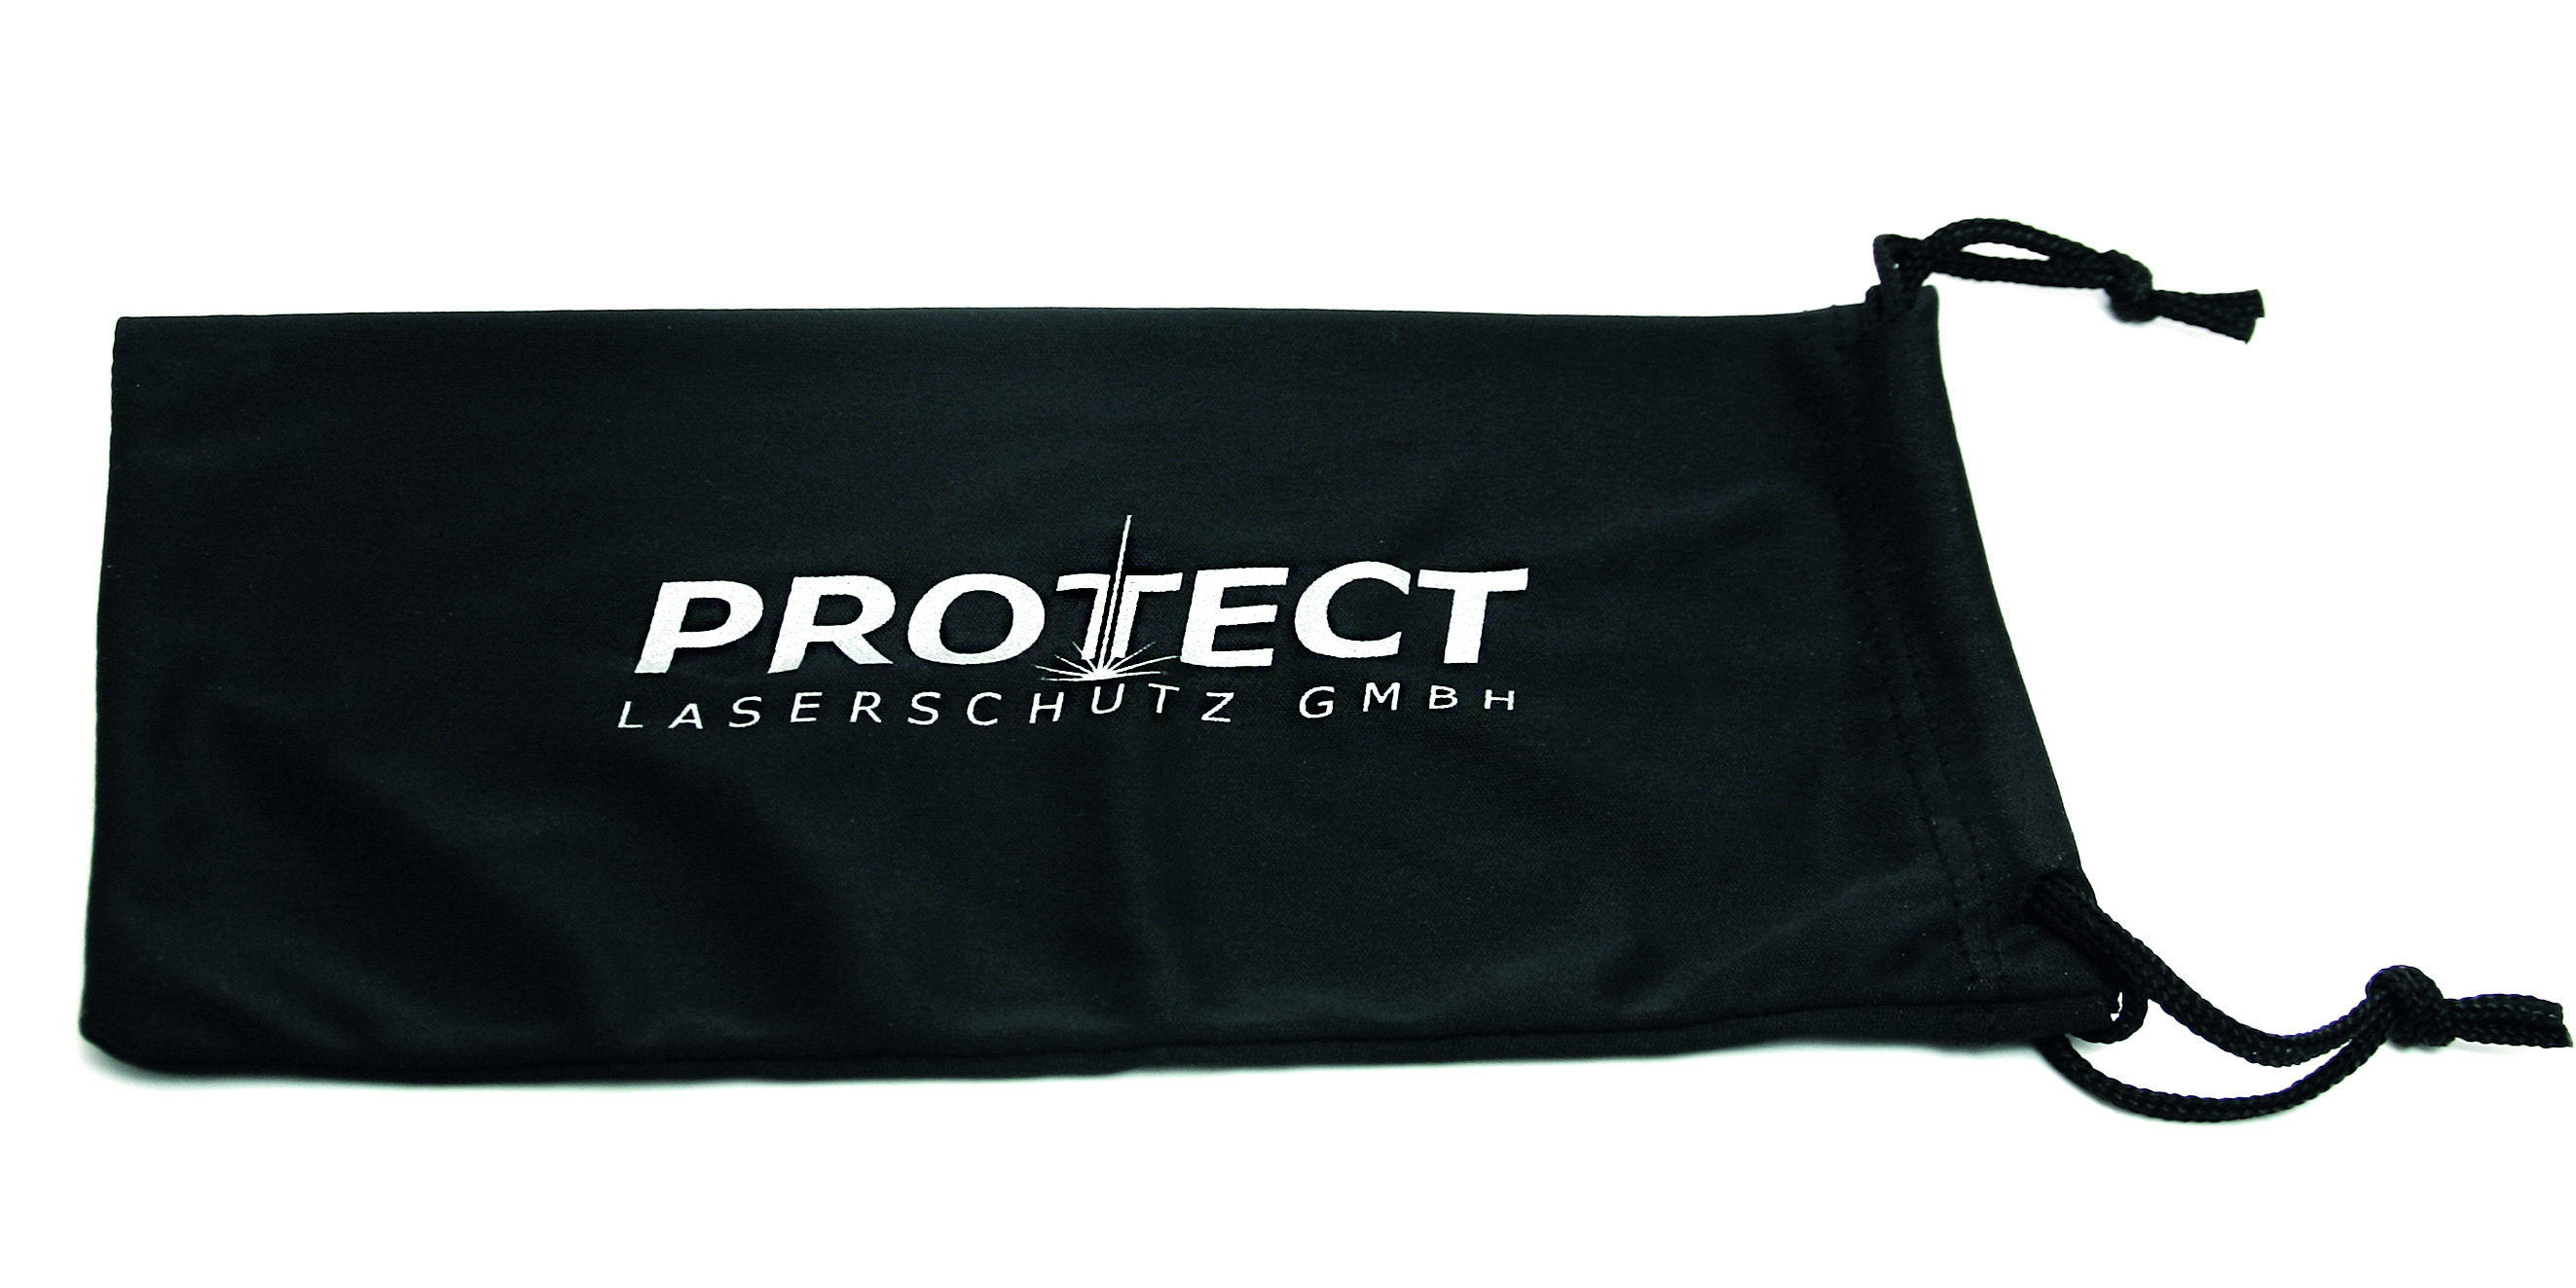 Großer mikrofaserbeutel mit PROTECT-Logo